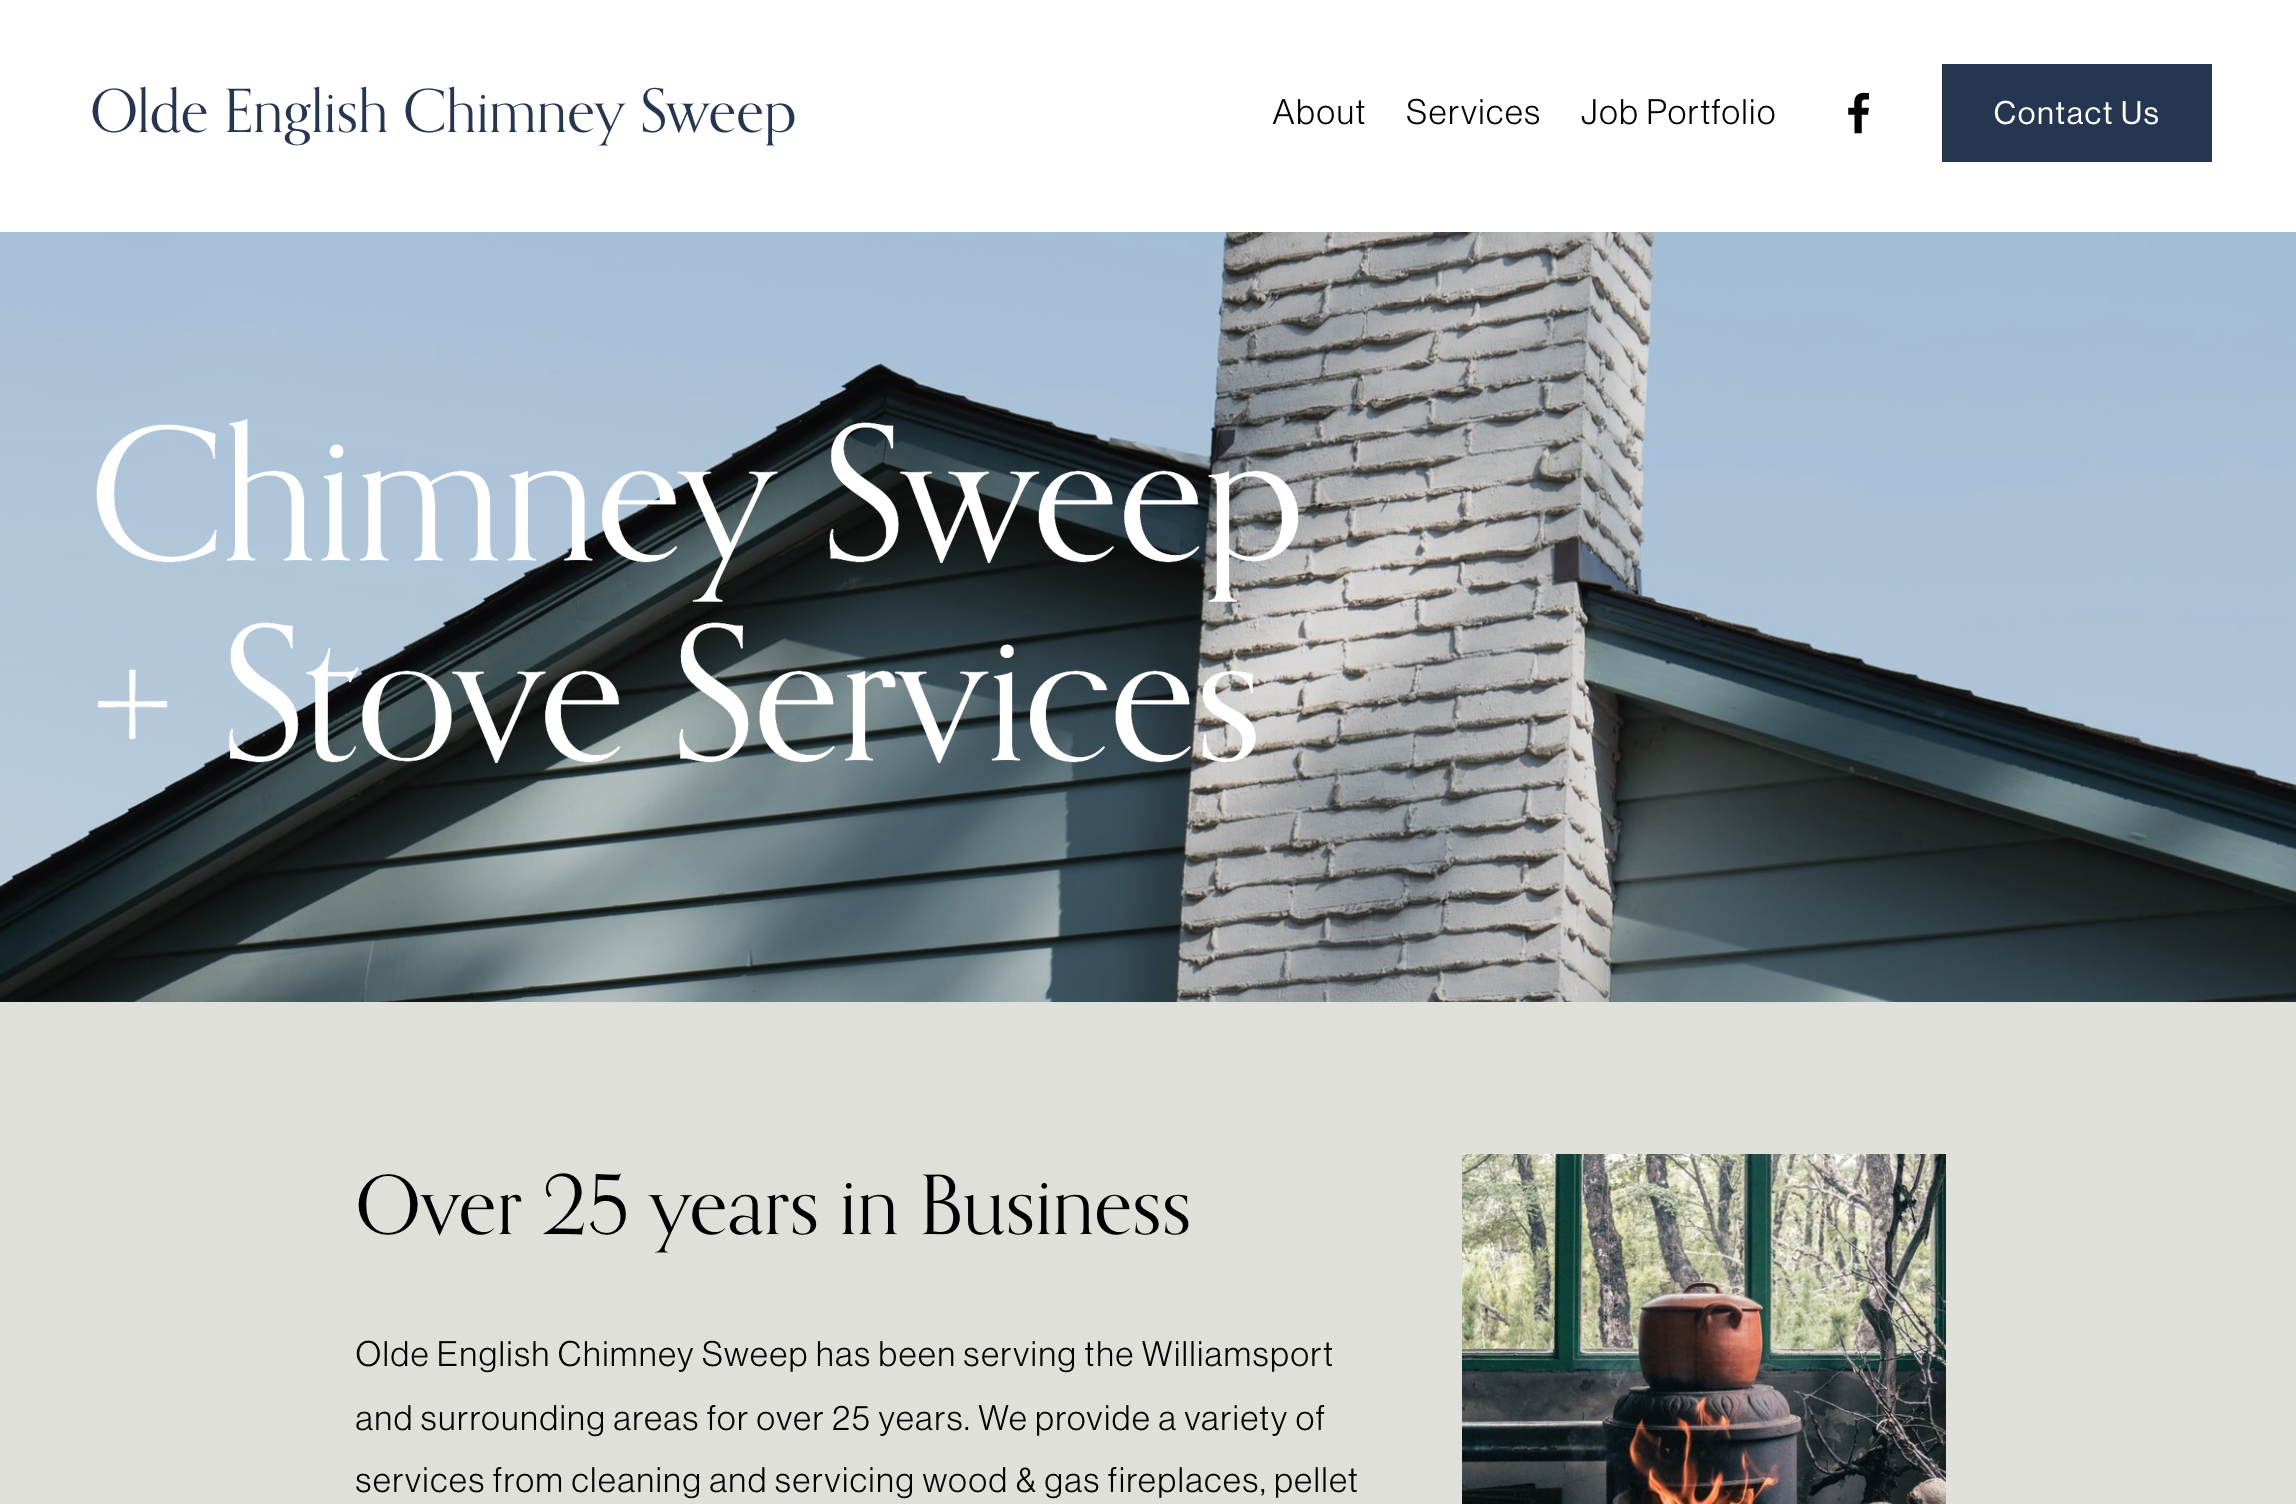 Olde English Chimney Sweep